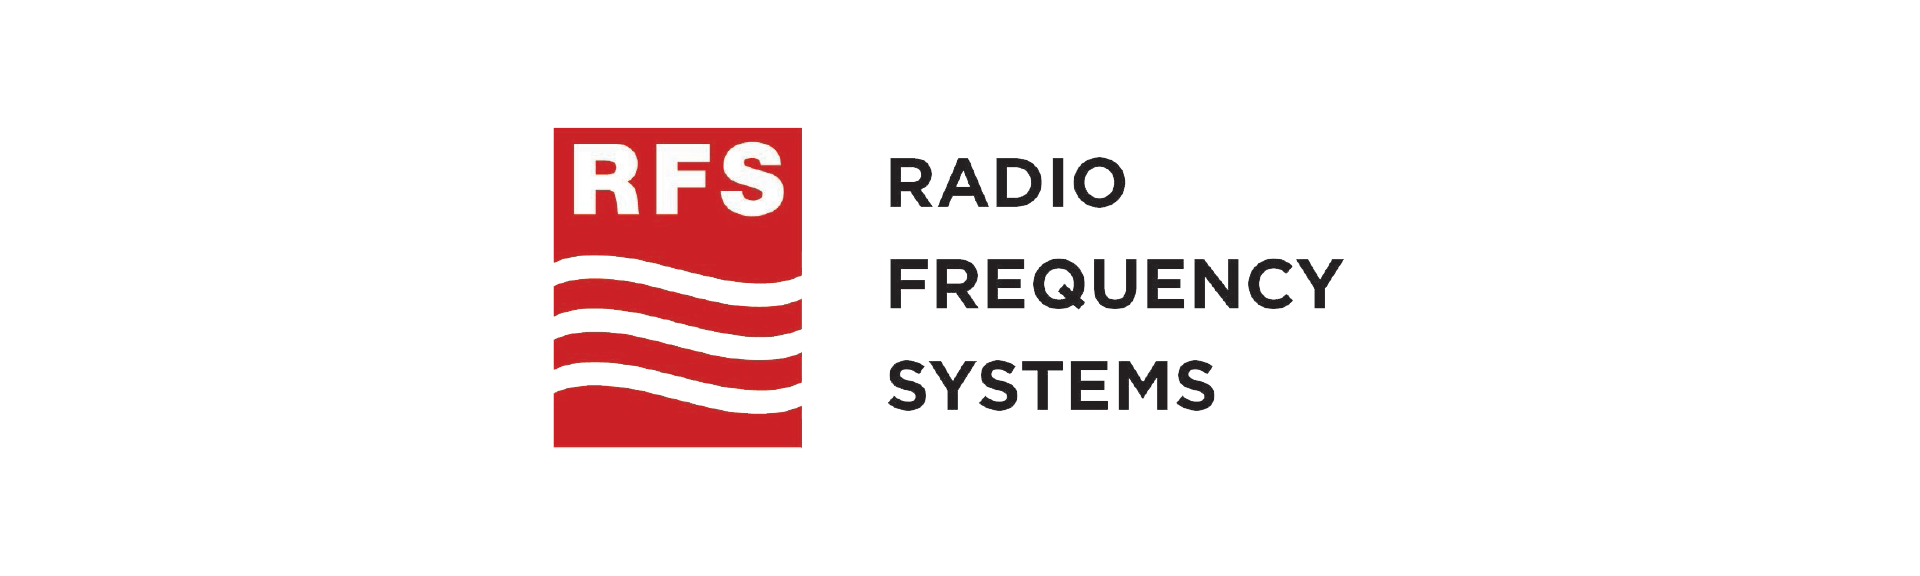 RFS Radio Frequency Systems